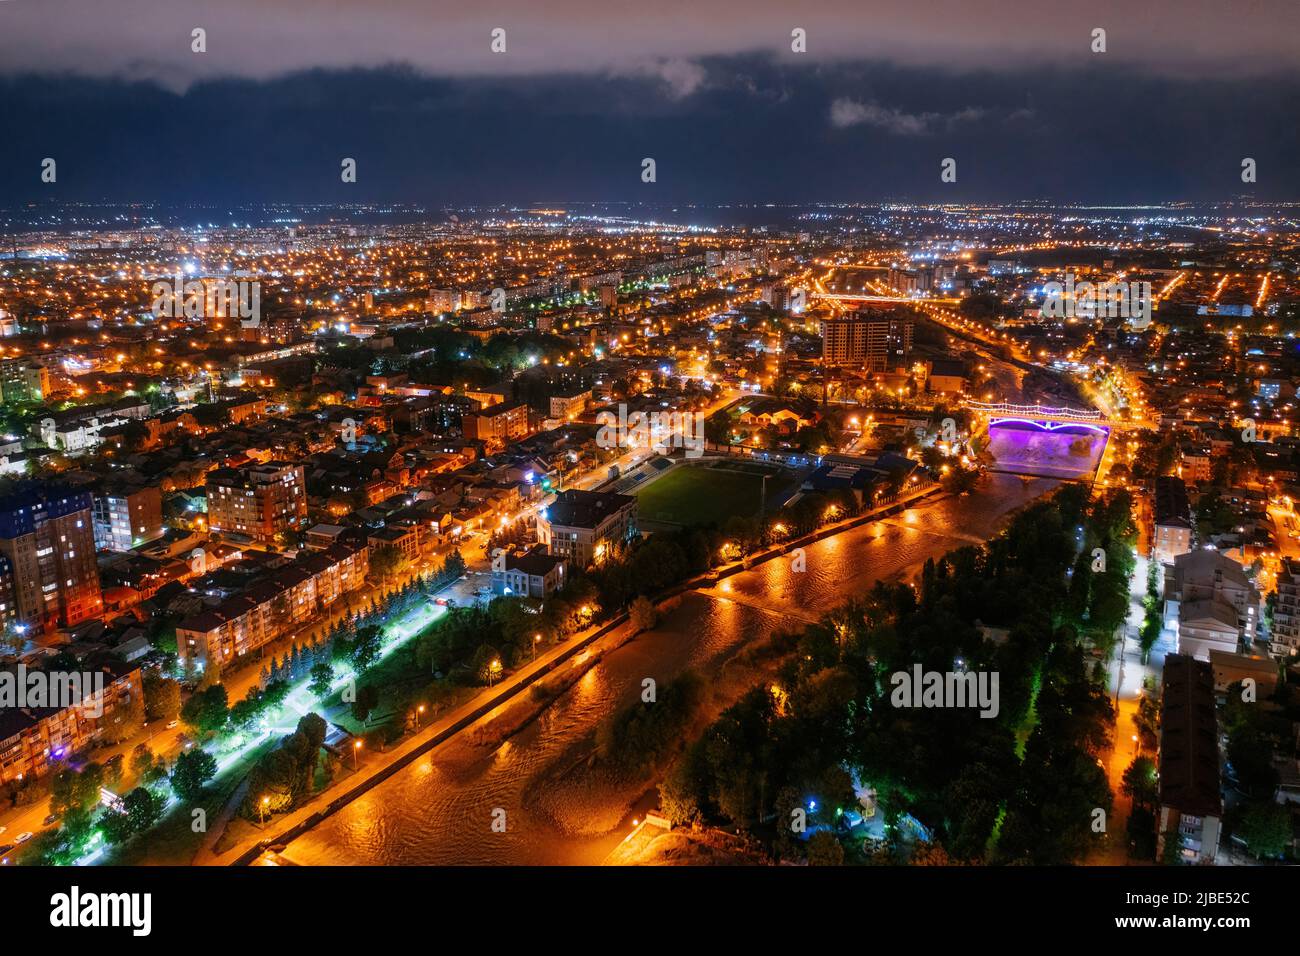 Vladikavkaz, capital of North Ossetia. Panorama from drone flight. Stock Photo